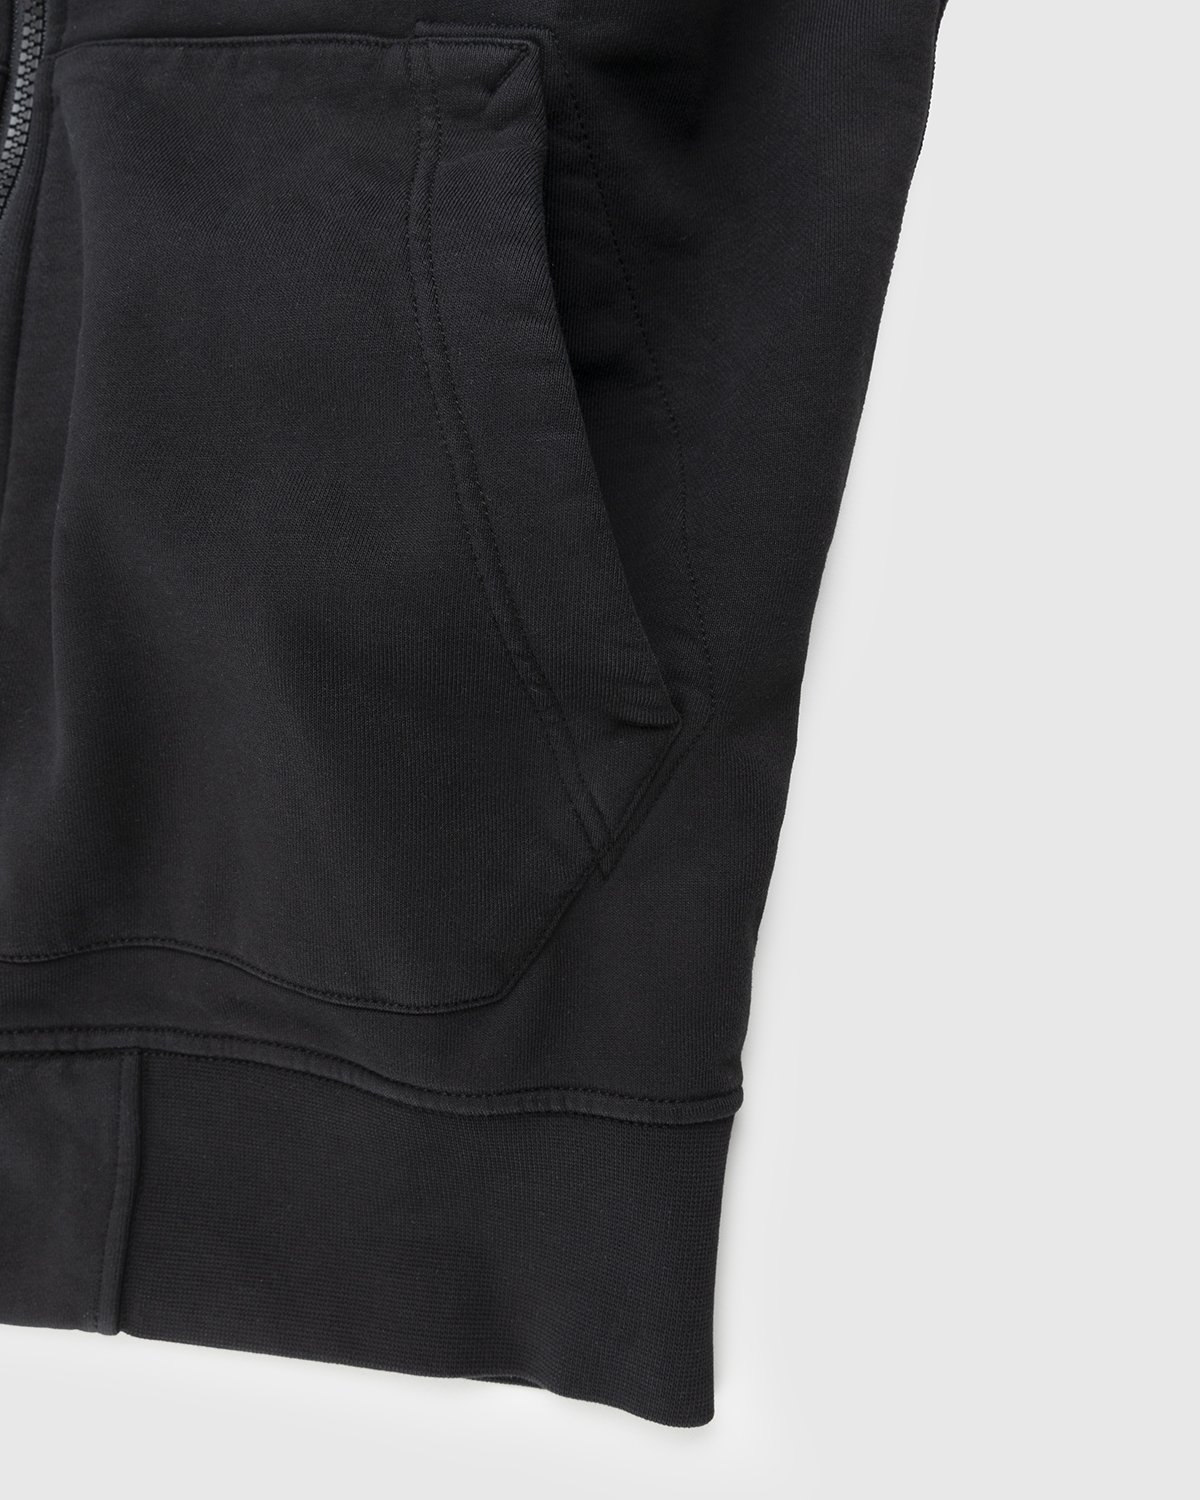 Stone Island - 64251 Garment-Dyed Full-Zip Hoodie Black - Clothing - Black - Image 5